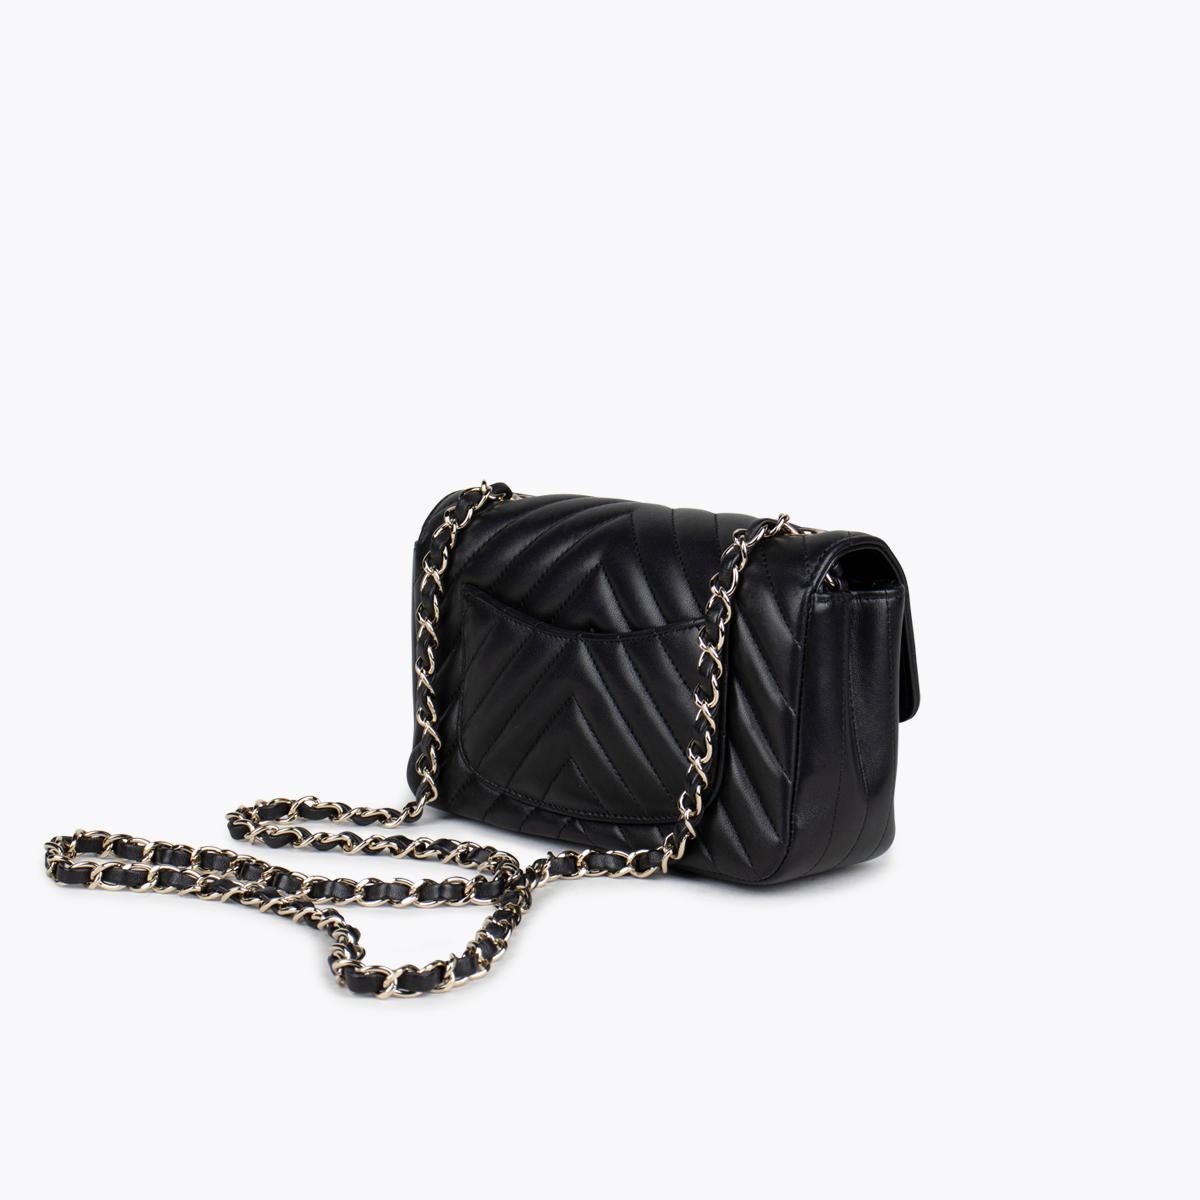 Chanel Mini Classic Chevron Flap Bag In Excellent Condition For Sale In Sundbyberg, SE